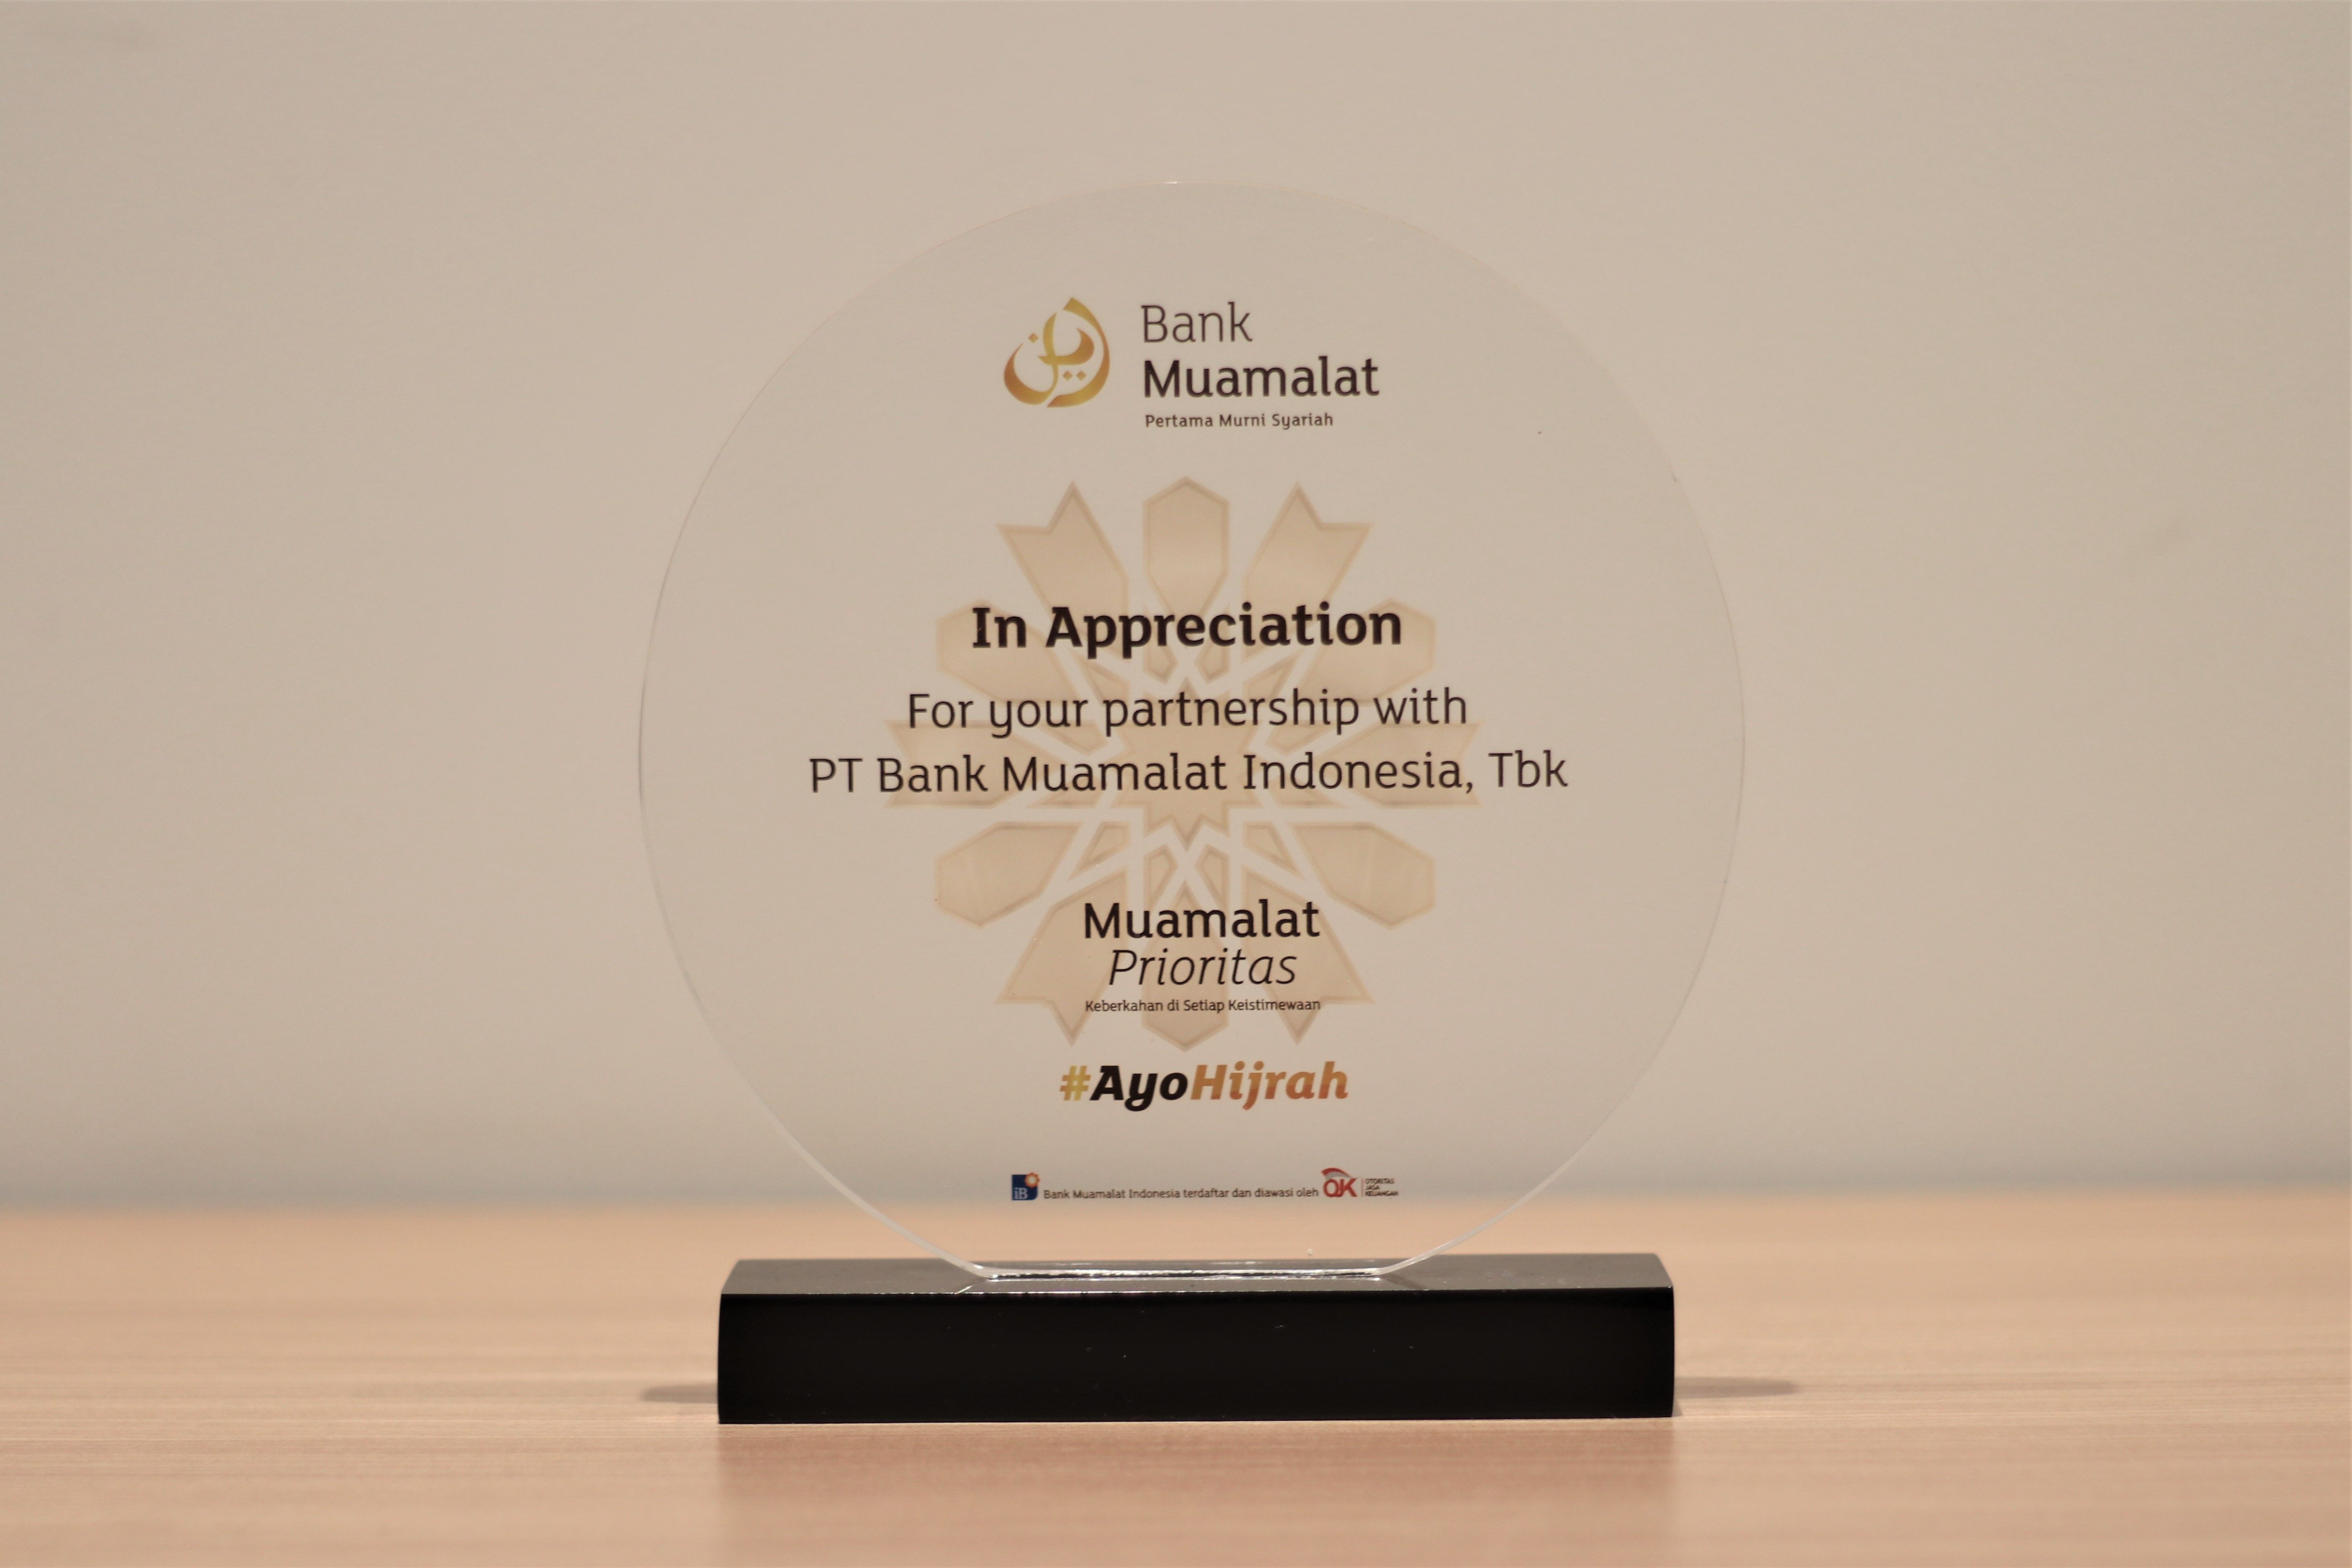 appreciation placard from pt bank muamalat indonesia, tbk